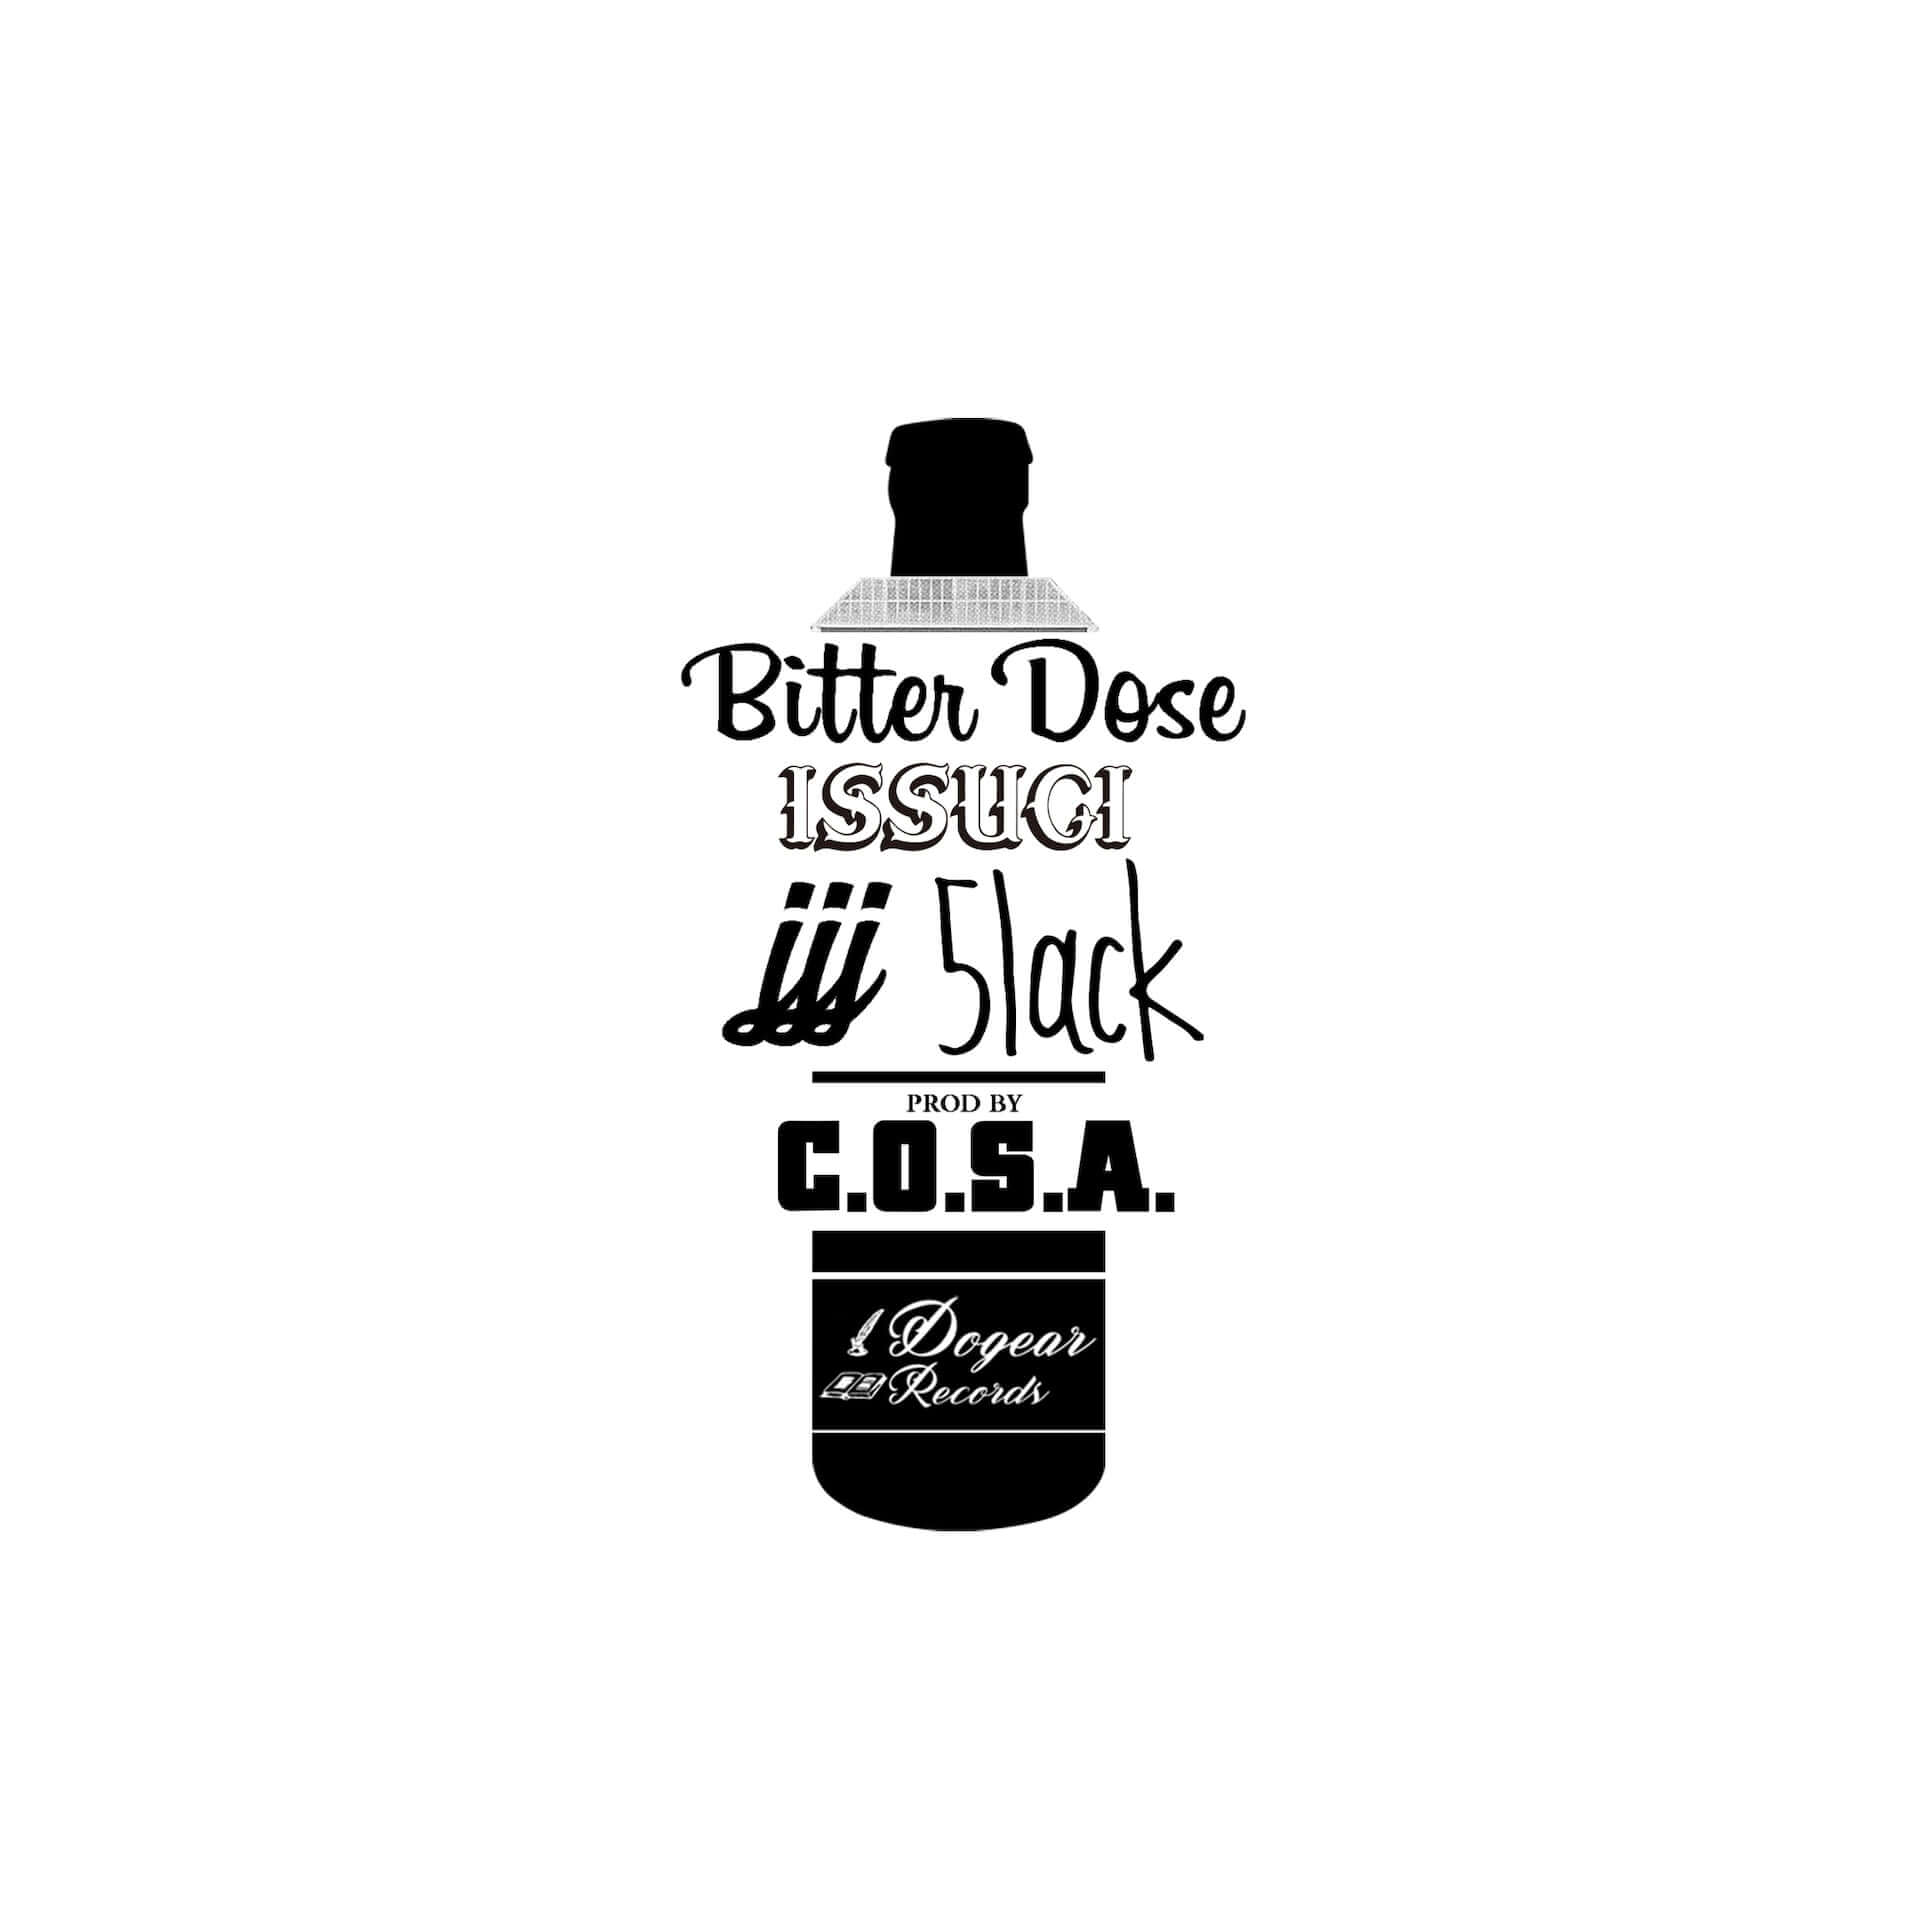 ISSUGI、JJJ、5lackによるシングル「Bitter Dose」がリリース決定｜C.O.S.A.がプロデュースを担当 music_bitterdose_main-1920x1920